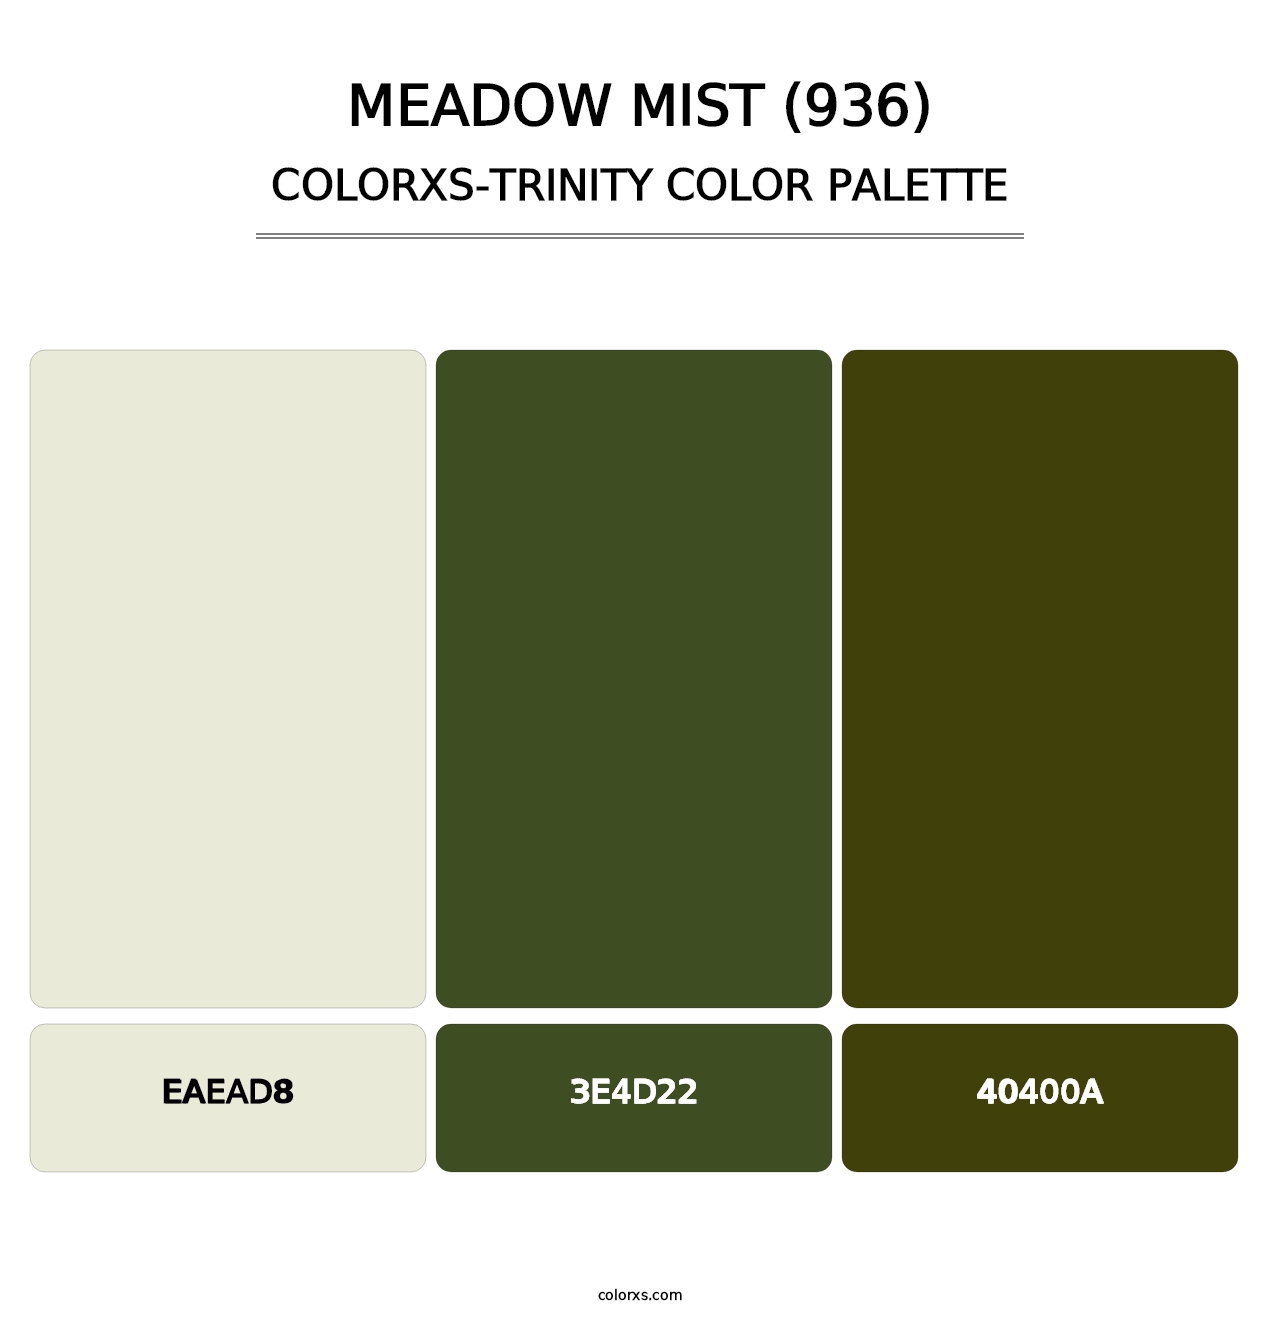 Meadow Mist (936) - Colorxs Trinity Palette